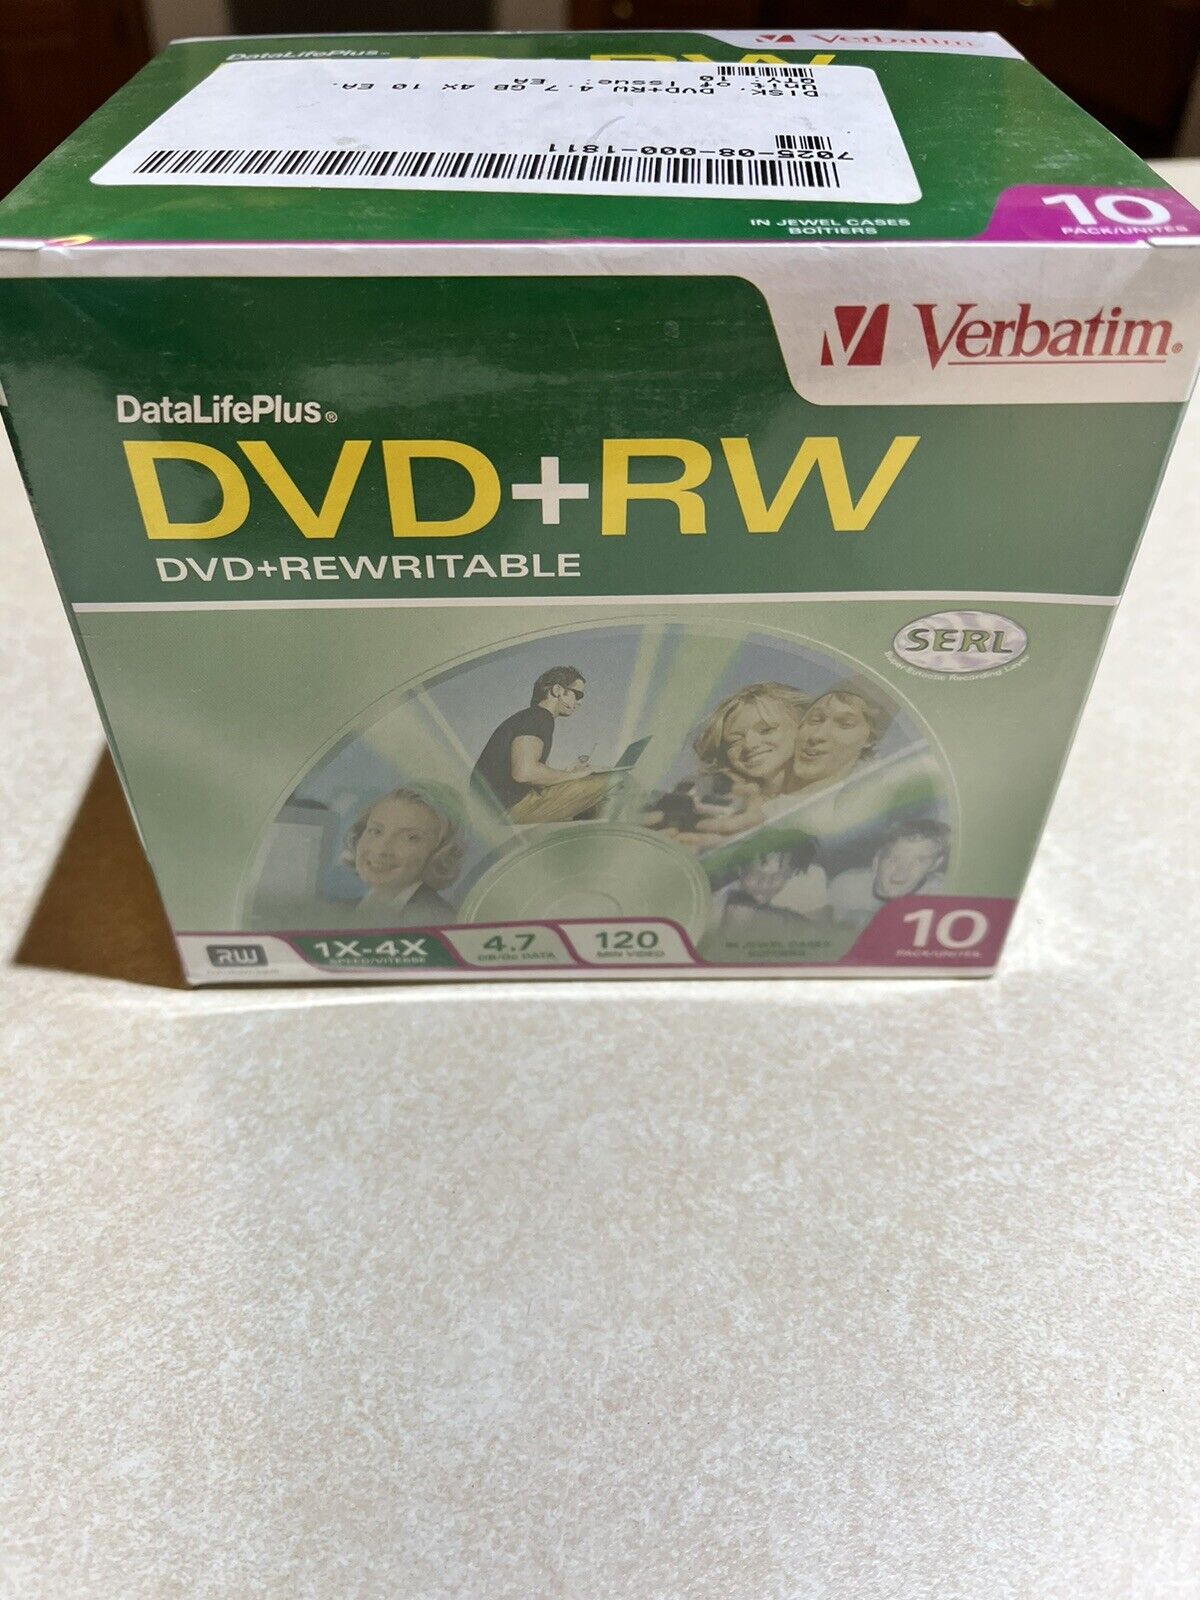 Verbatim DataLife Plus DVD+Rewriteable 1X-4X 10 Pack Factory Sealed 